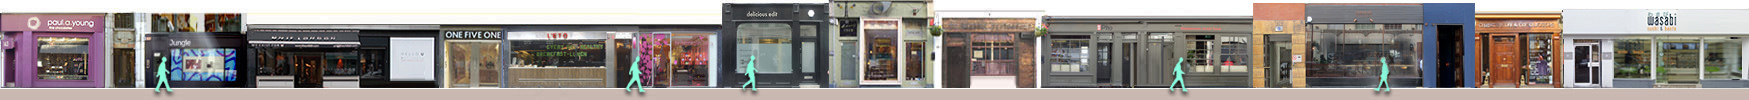 Shops and restaurants on Wardour Street: Paul Young chocolates, St Moritz Swiss restaurant, Pho Vietnamese, Tamarind Kitchen